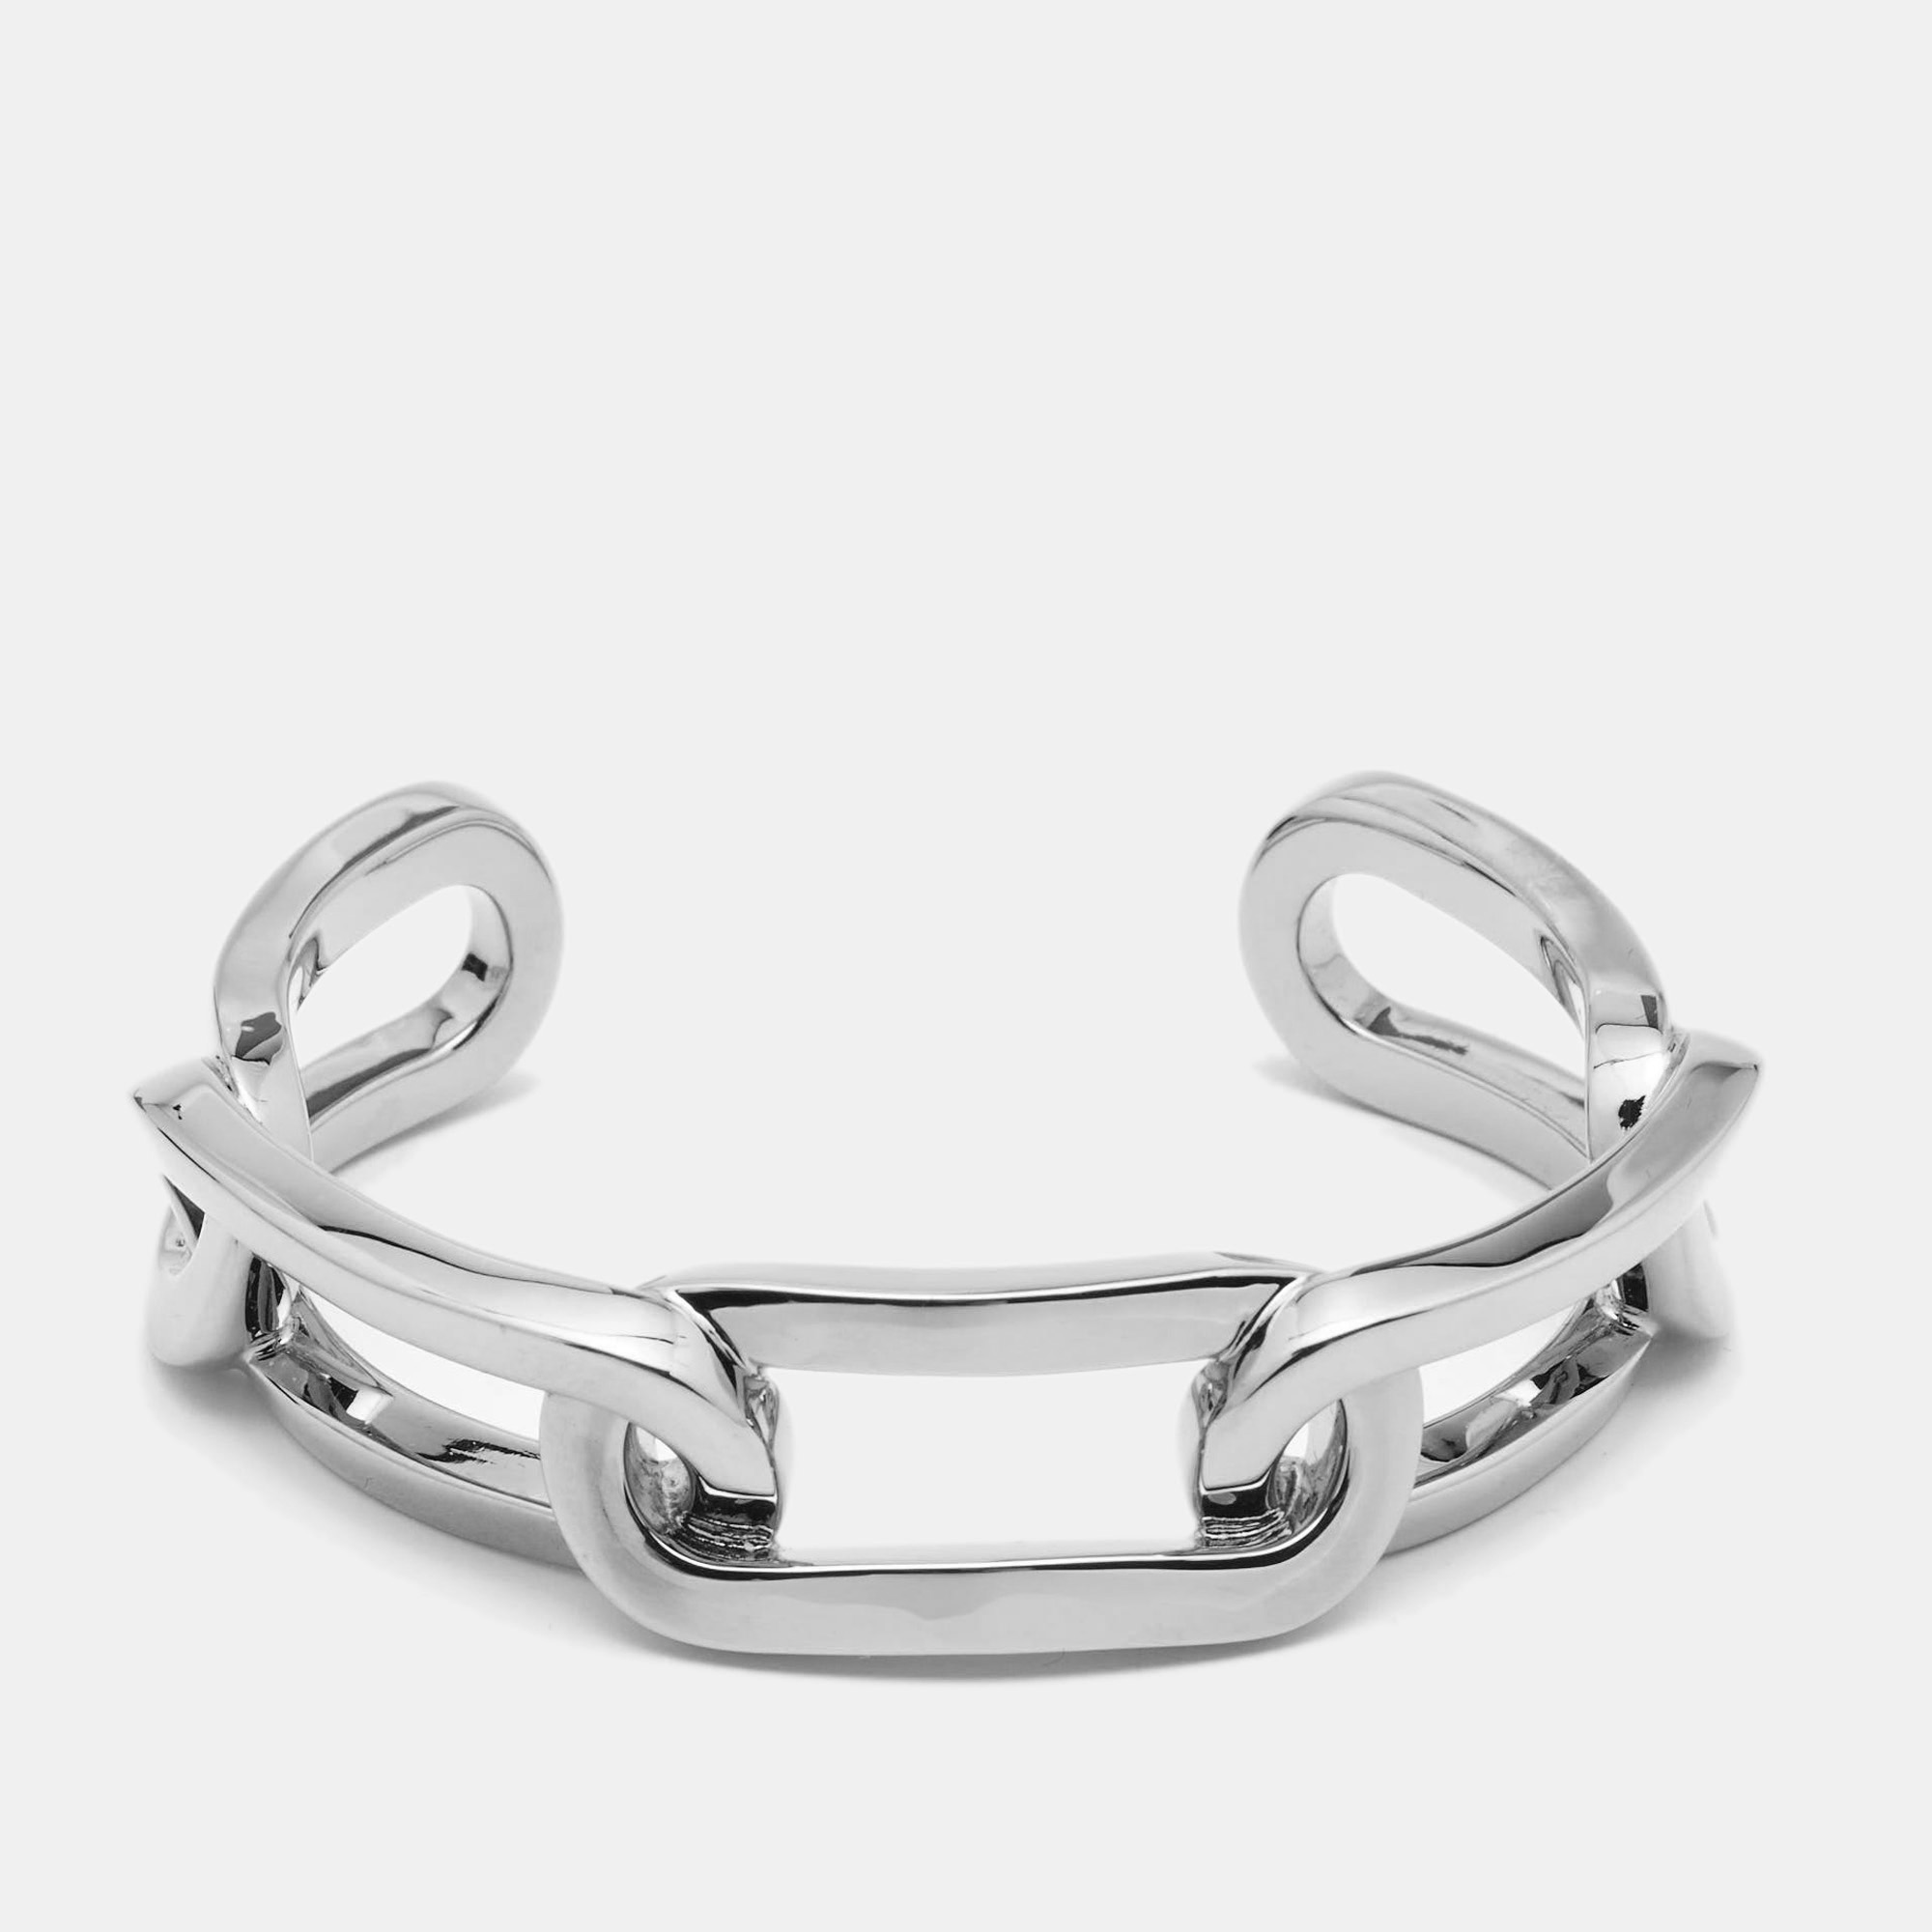 Burberry Chain Link Motif Silver Tone Open Cuff Bracelet M